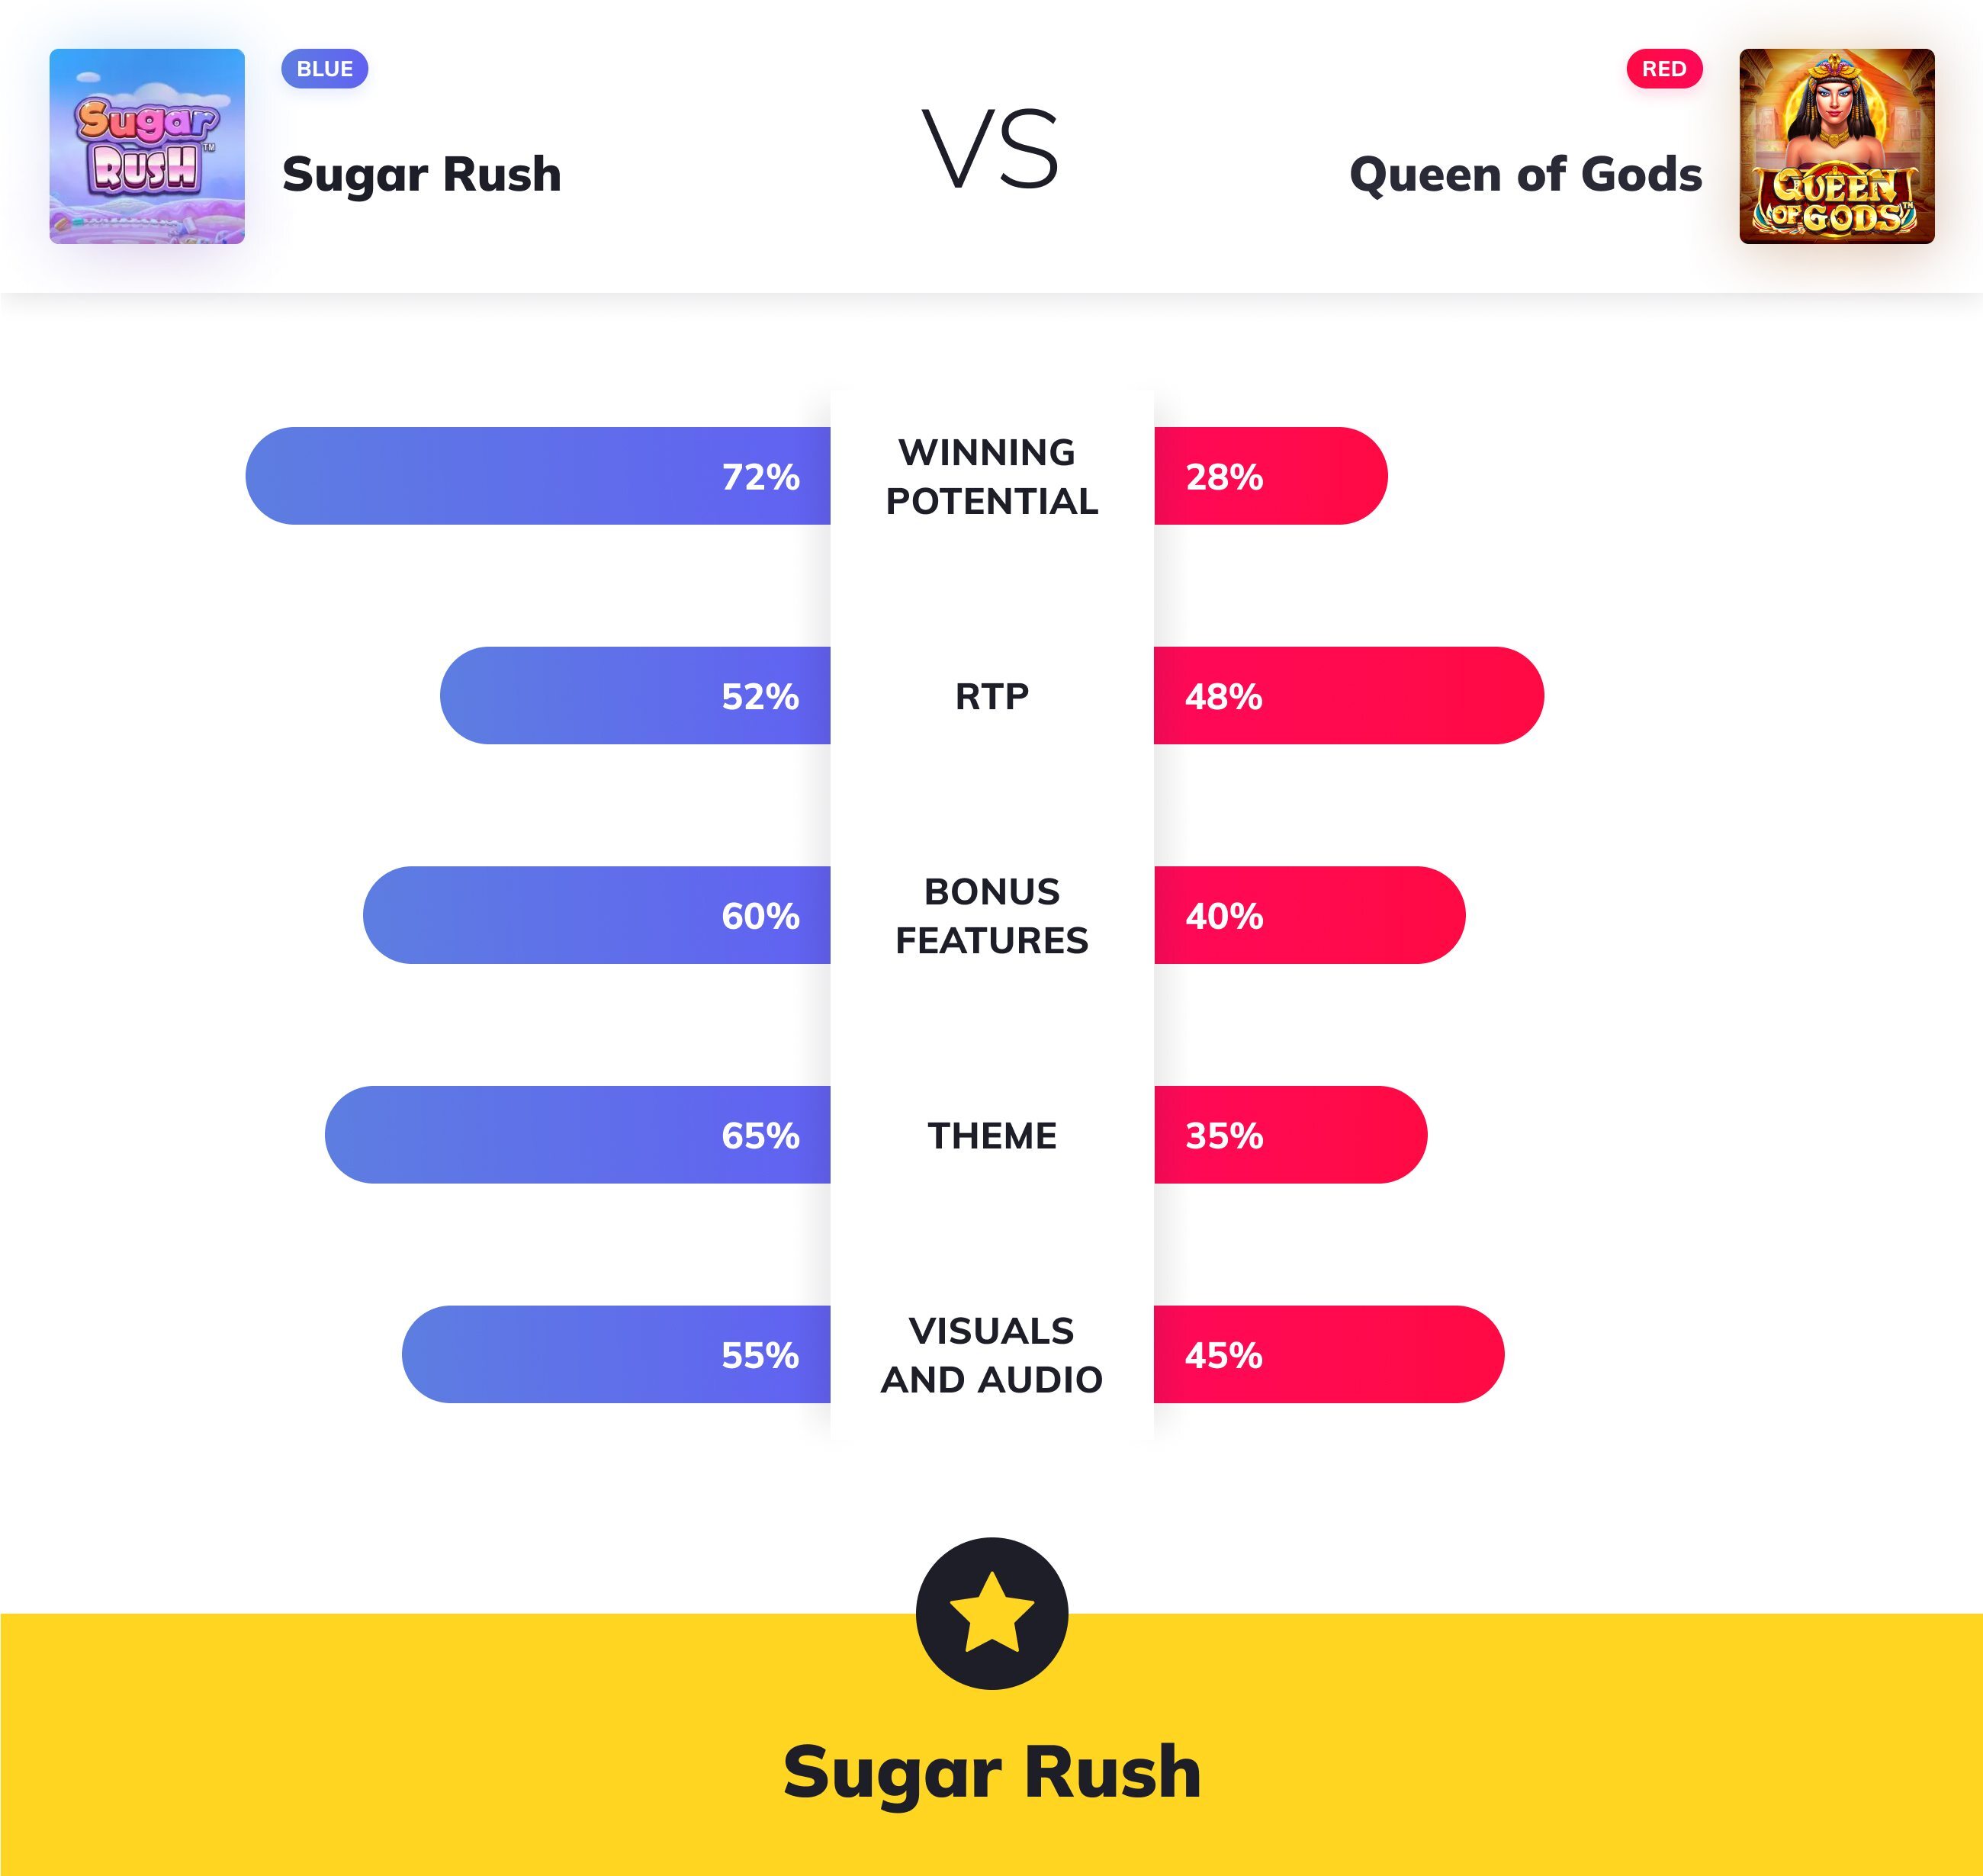 Slot Wars - Sugar Rush VS Queen of Gods